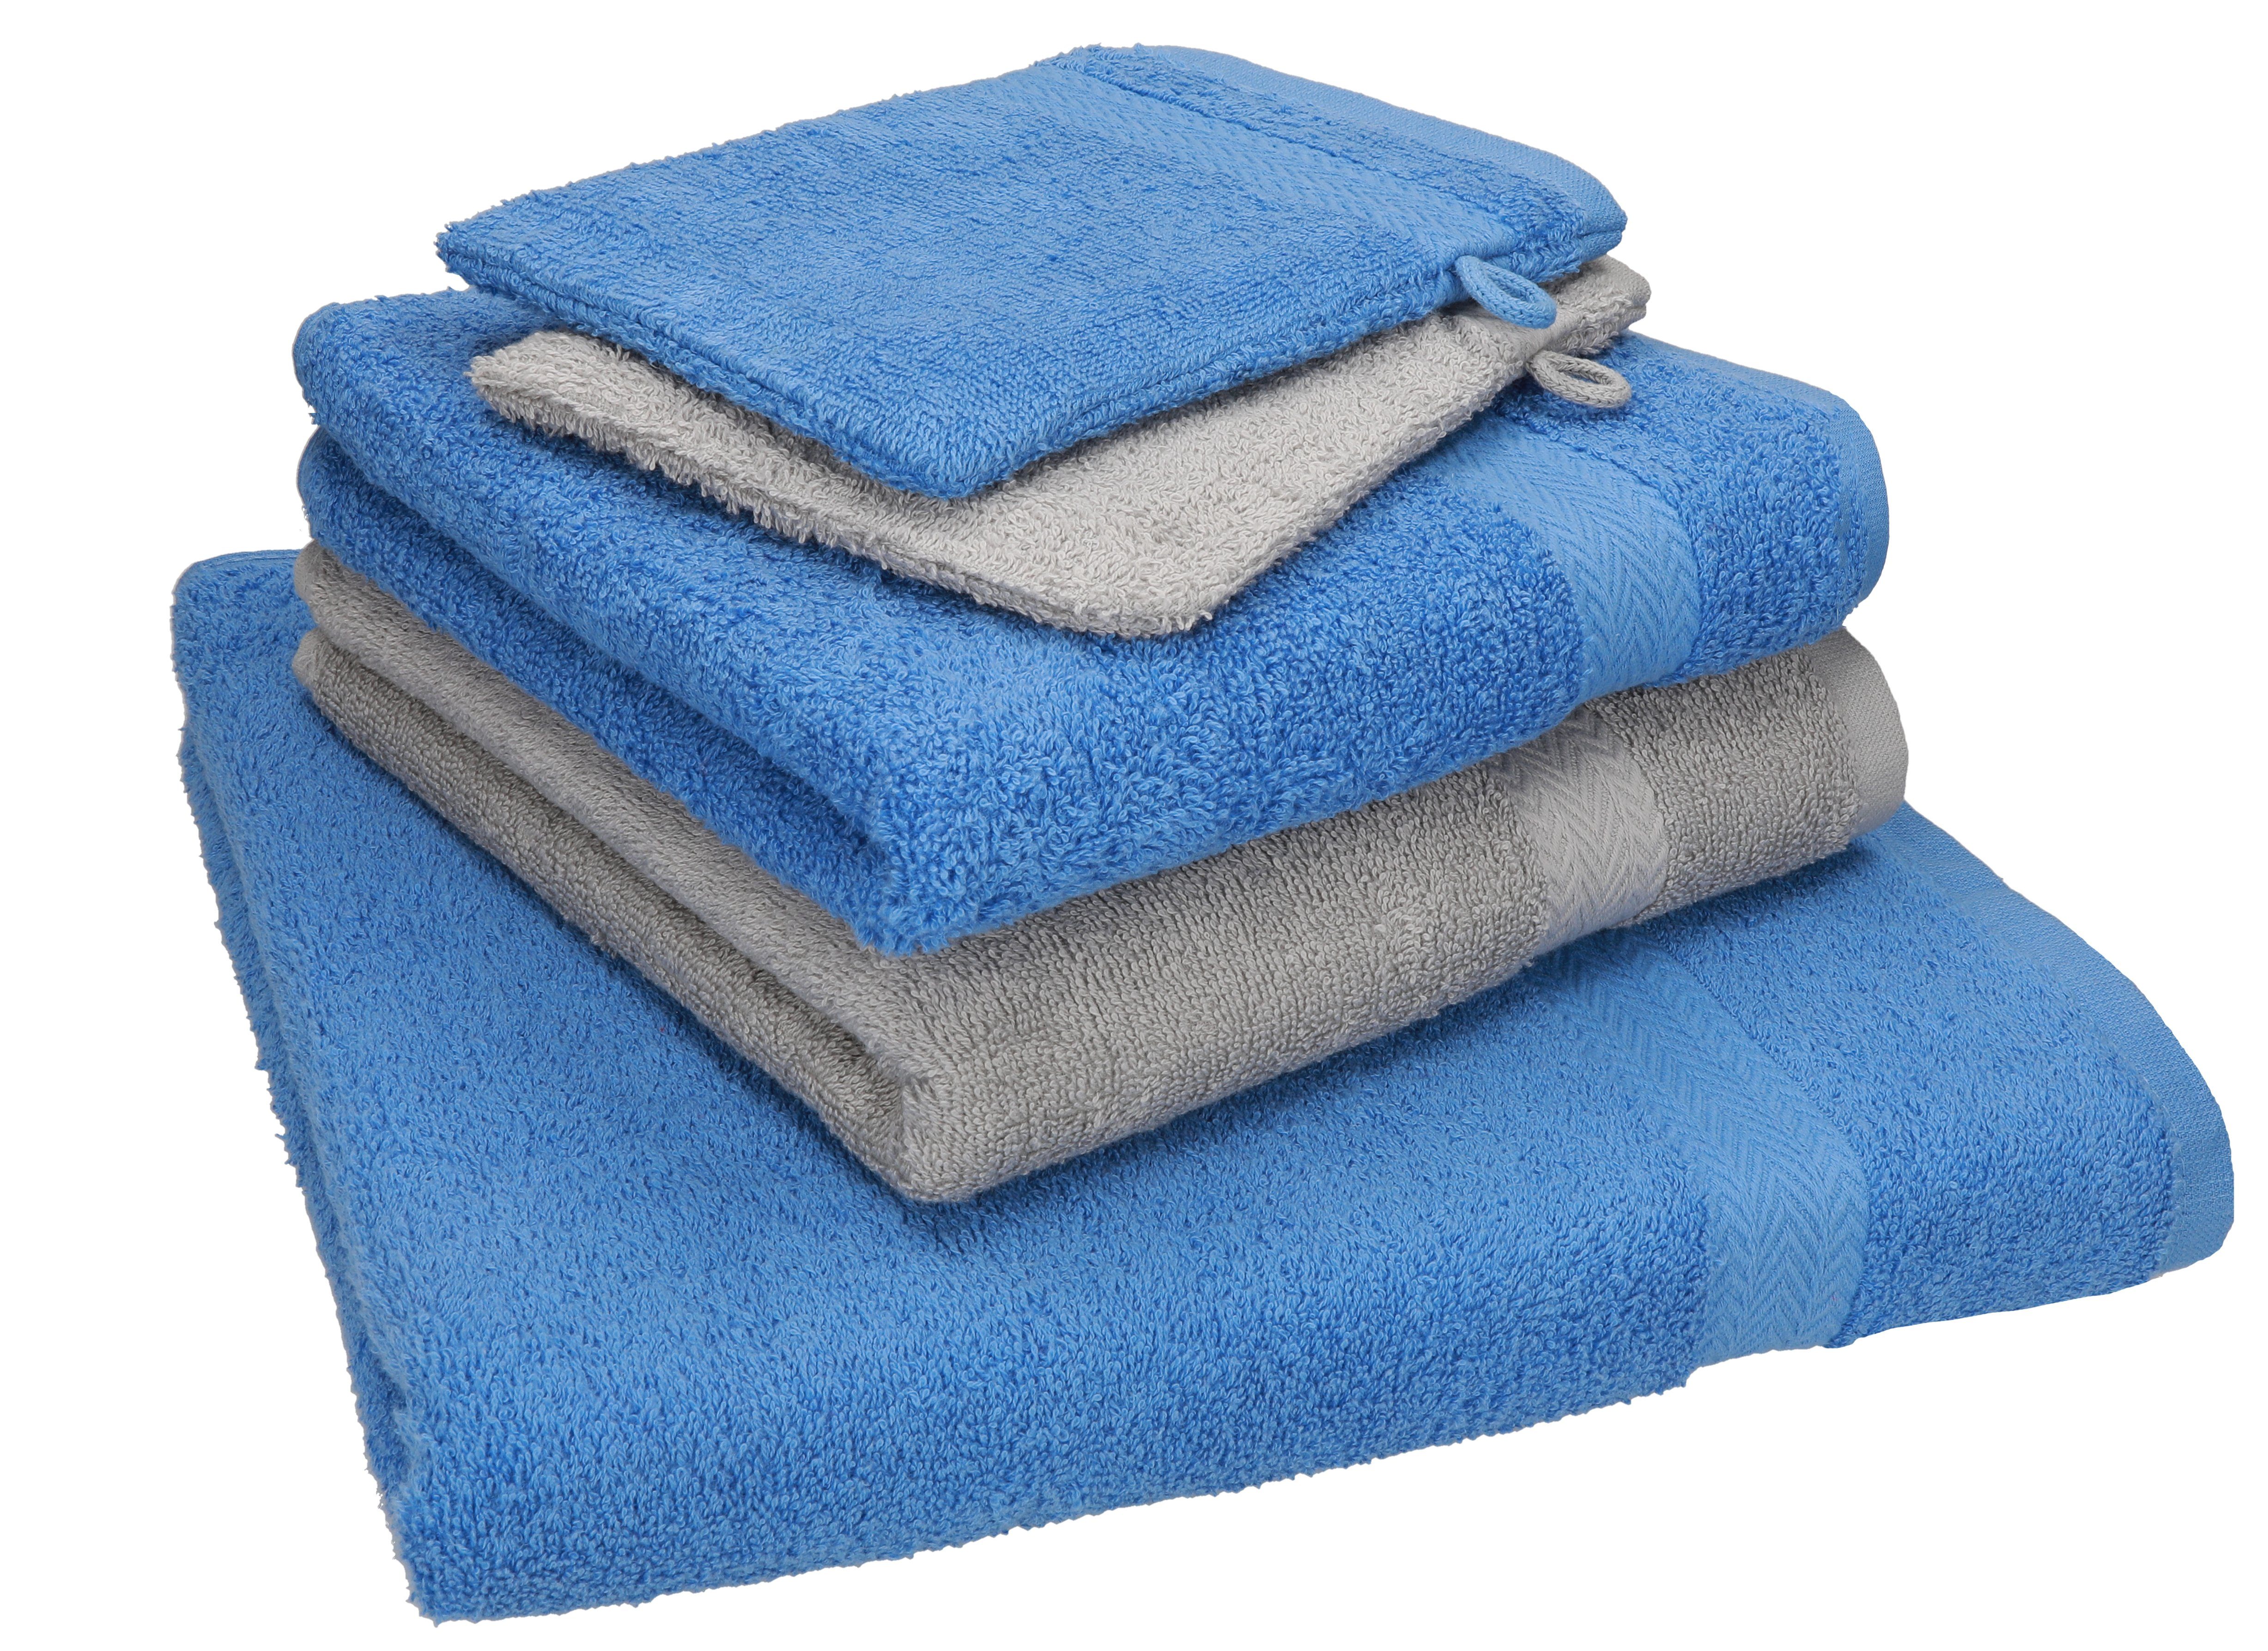 Handtuch Betz Handtuch 2 1 Baumwolle Handtücher 100% Pack 5 Duschtuch Waschhandschuhe, Set Single Baumwolle hellblau-silbergrau Set 100% 2 TLG.